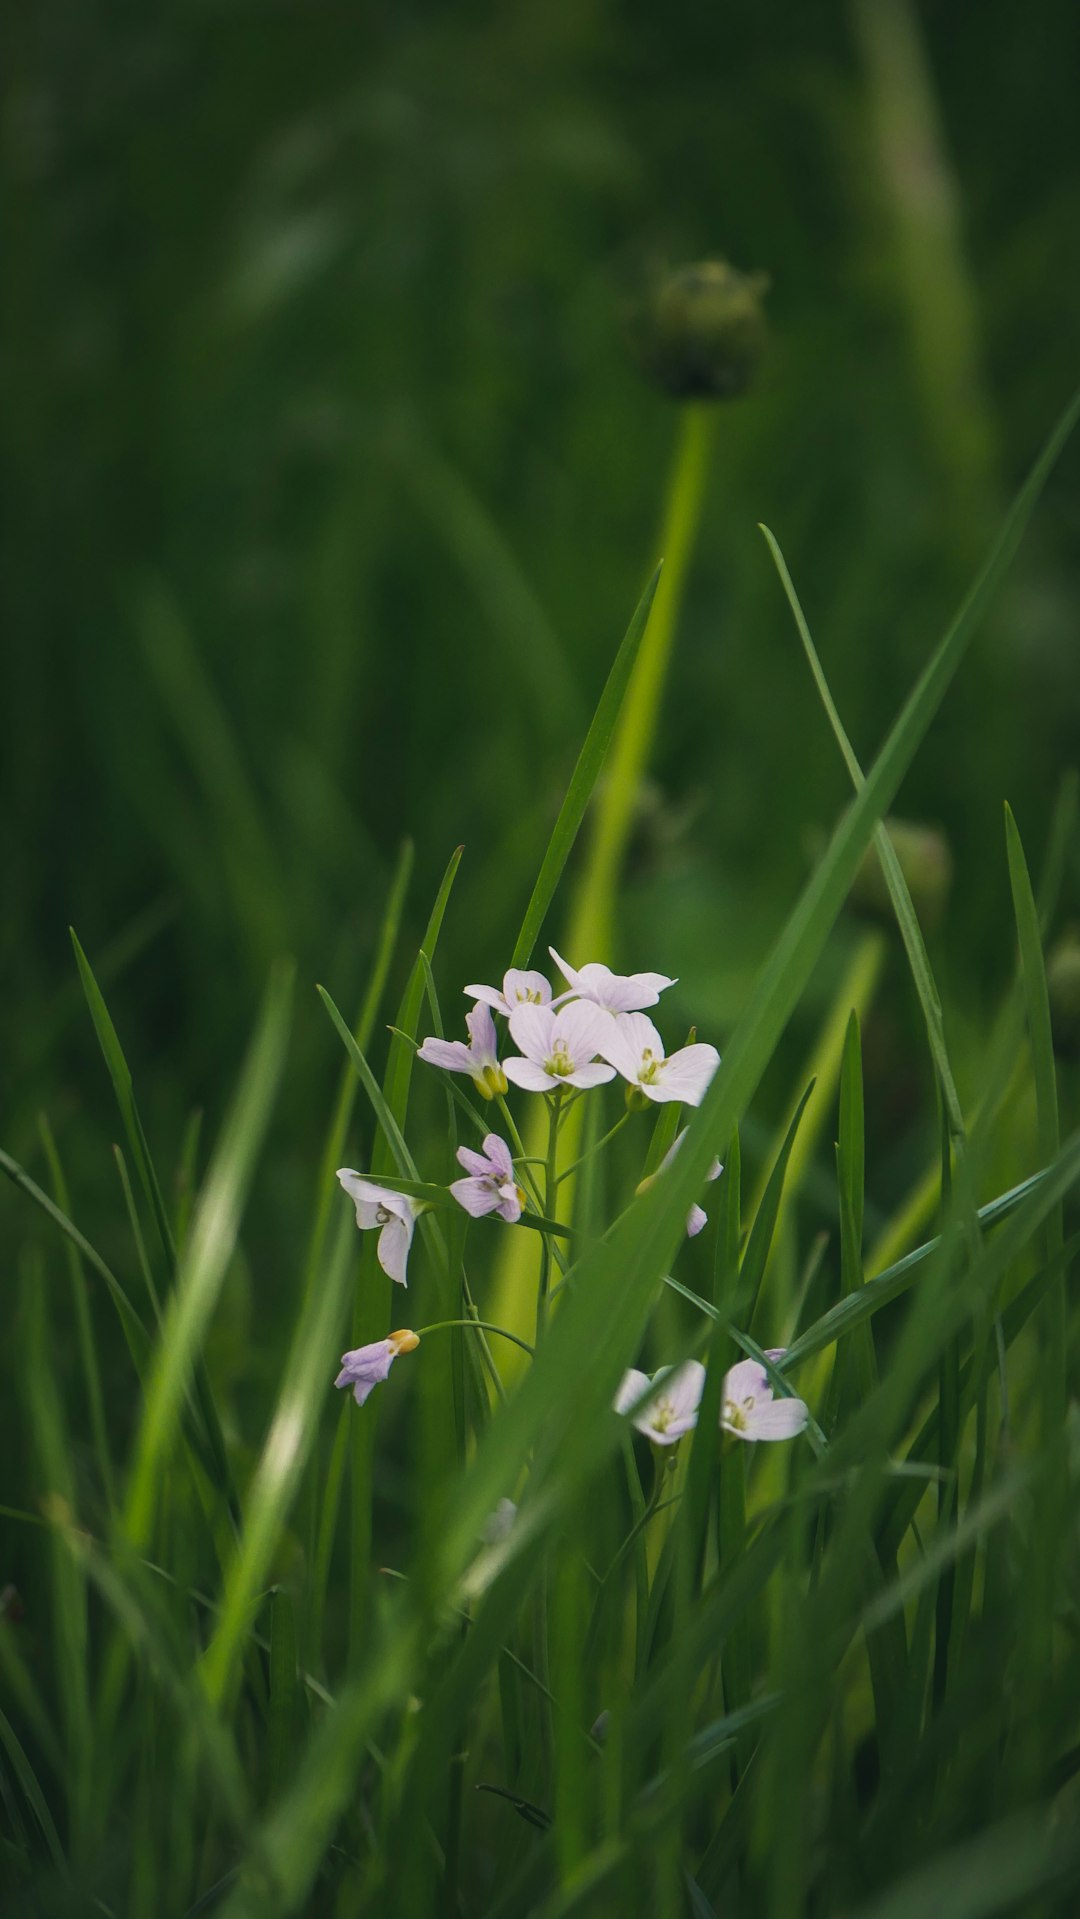 white flowers in green grass field